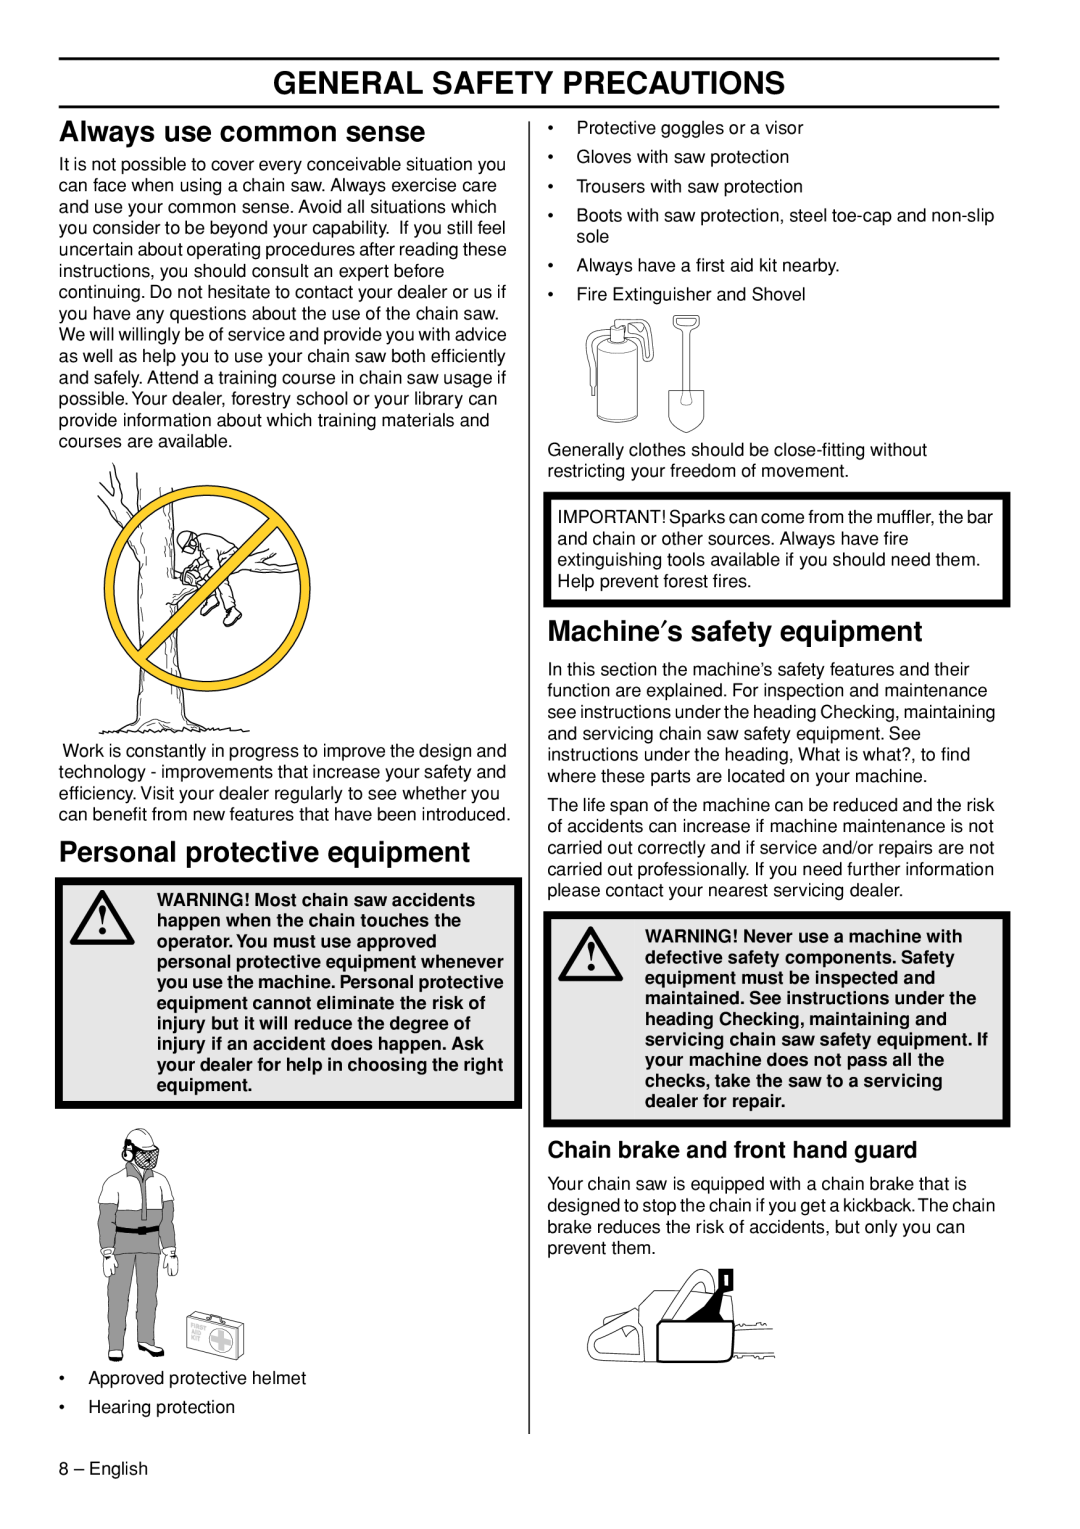 Husqvarna 372 XPG manual Always use common sense, Personal protective equipment, Machine′s safety equipment 